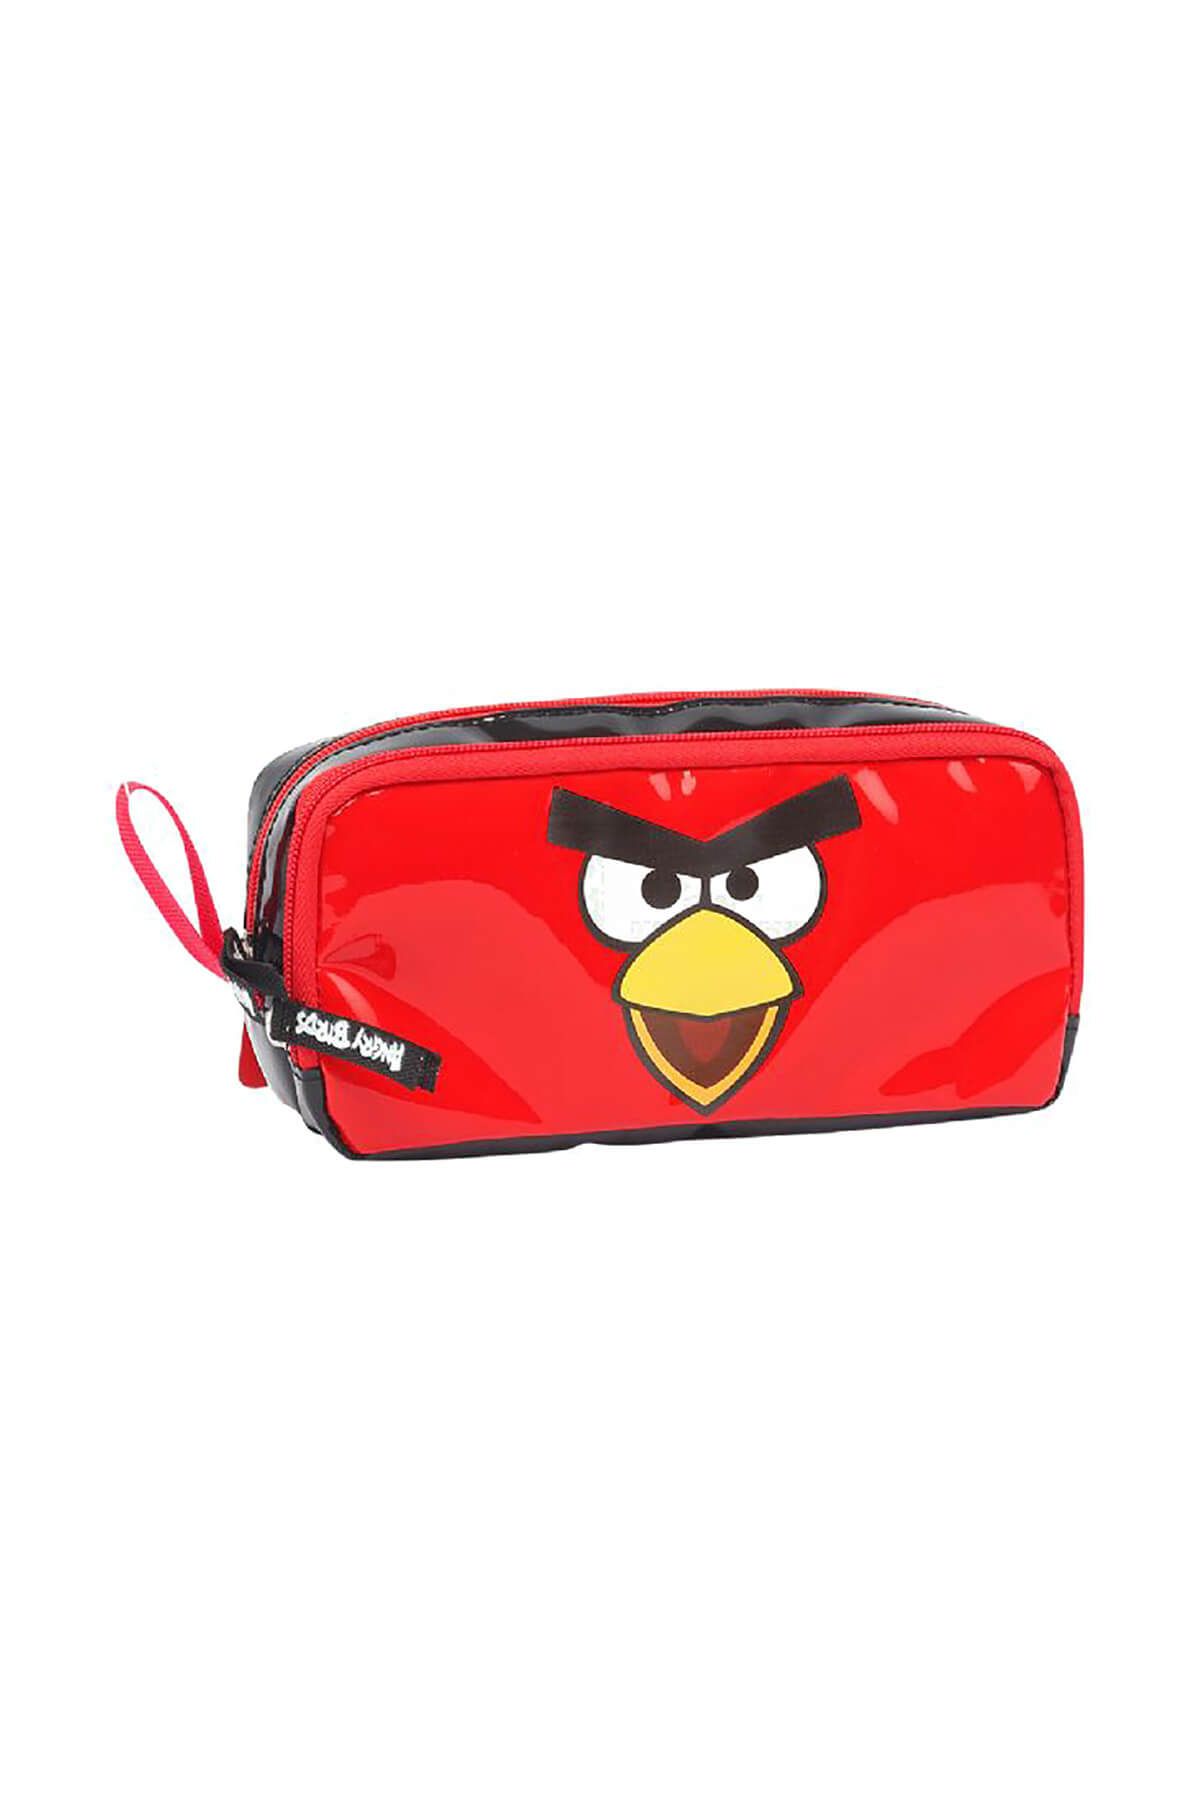 Angry Birds Angry Bırds Kalem Çantası /